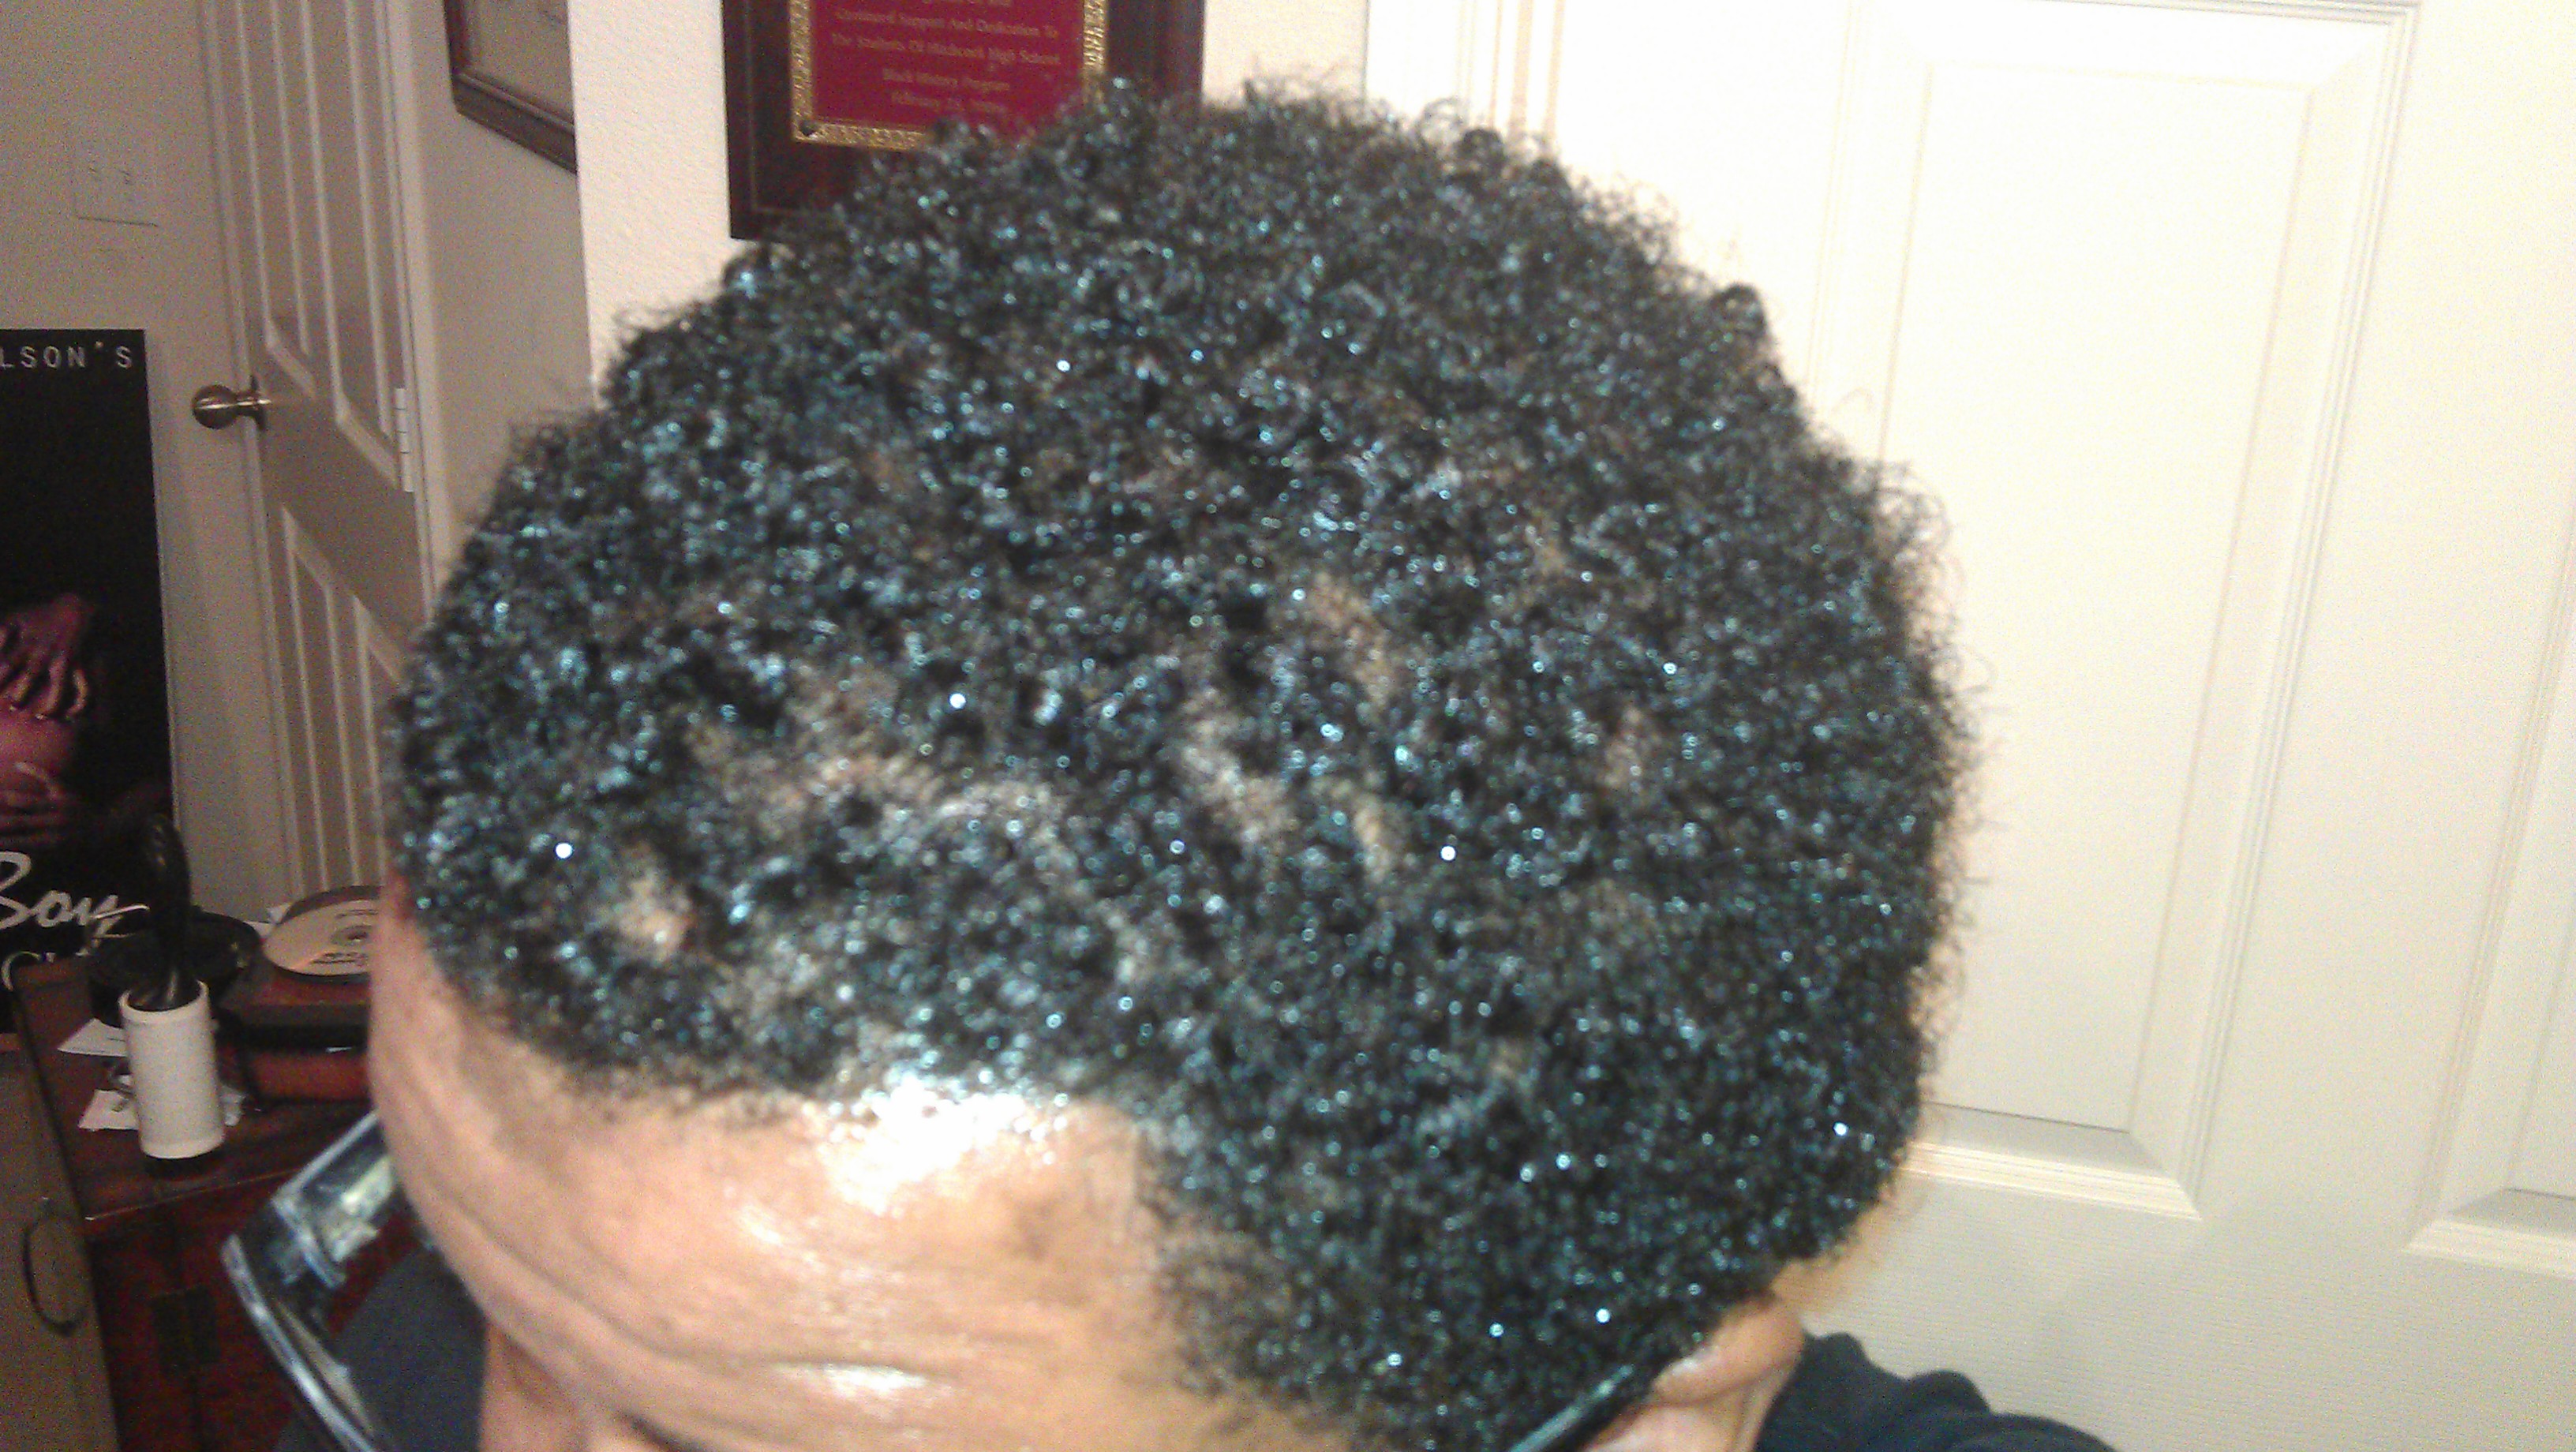 My natural curls using Motions Curl Defining Creme April 5, 2012